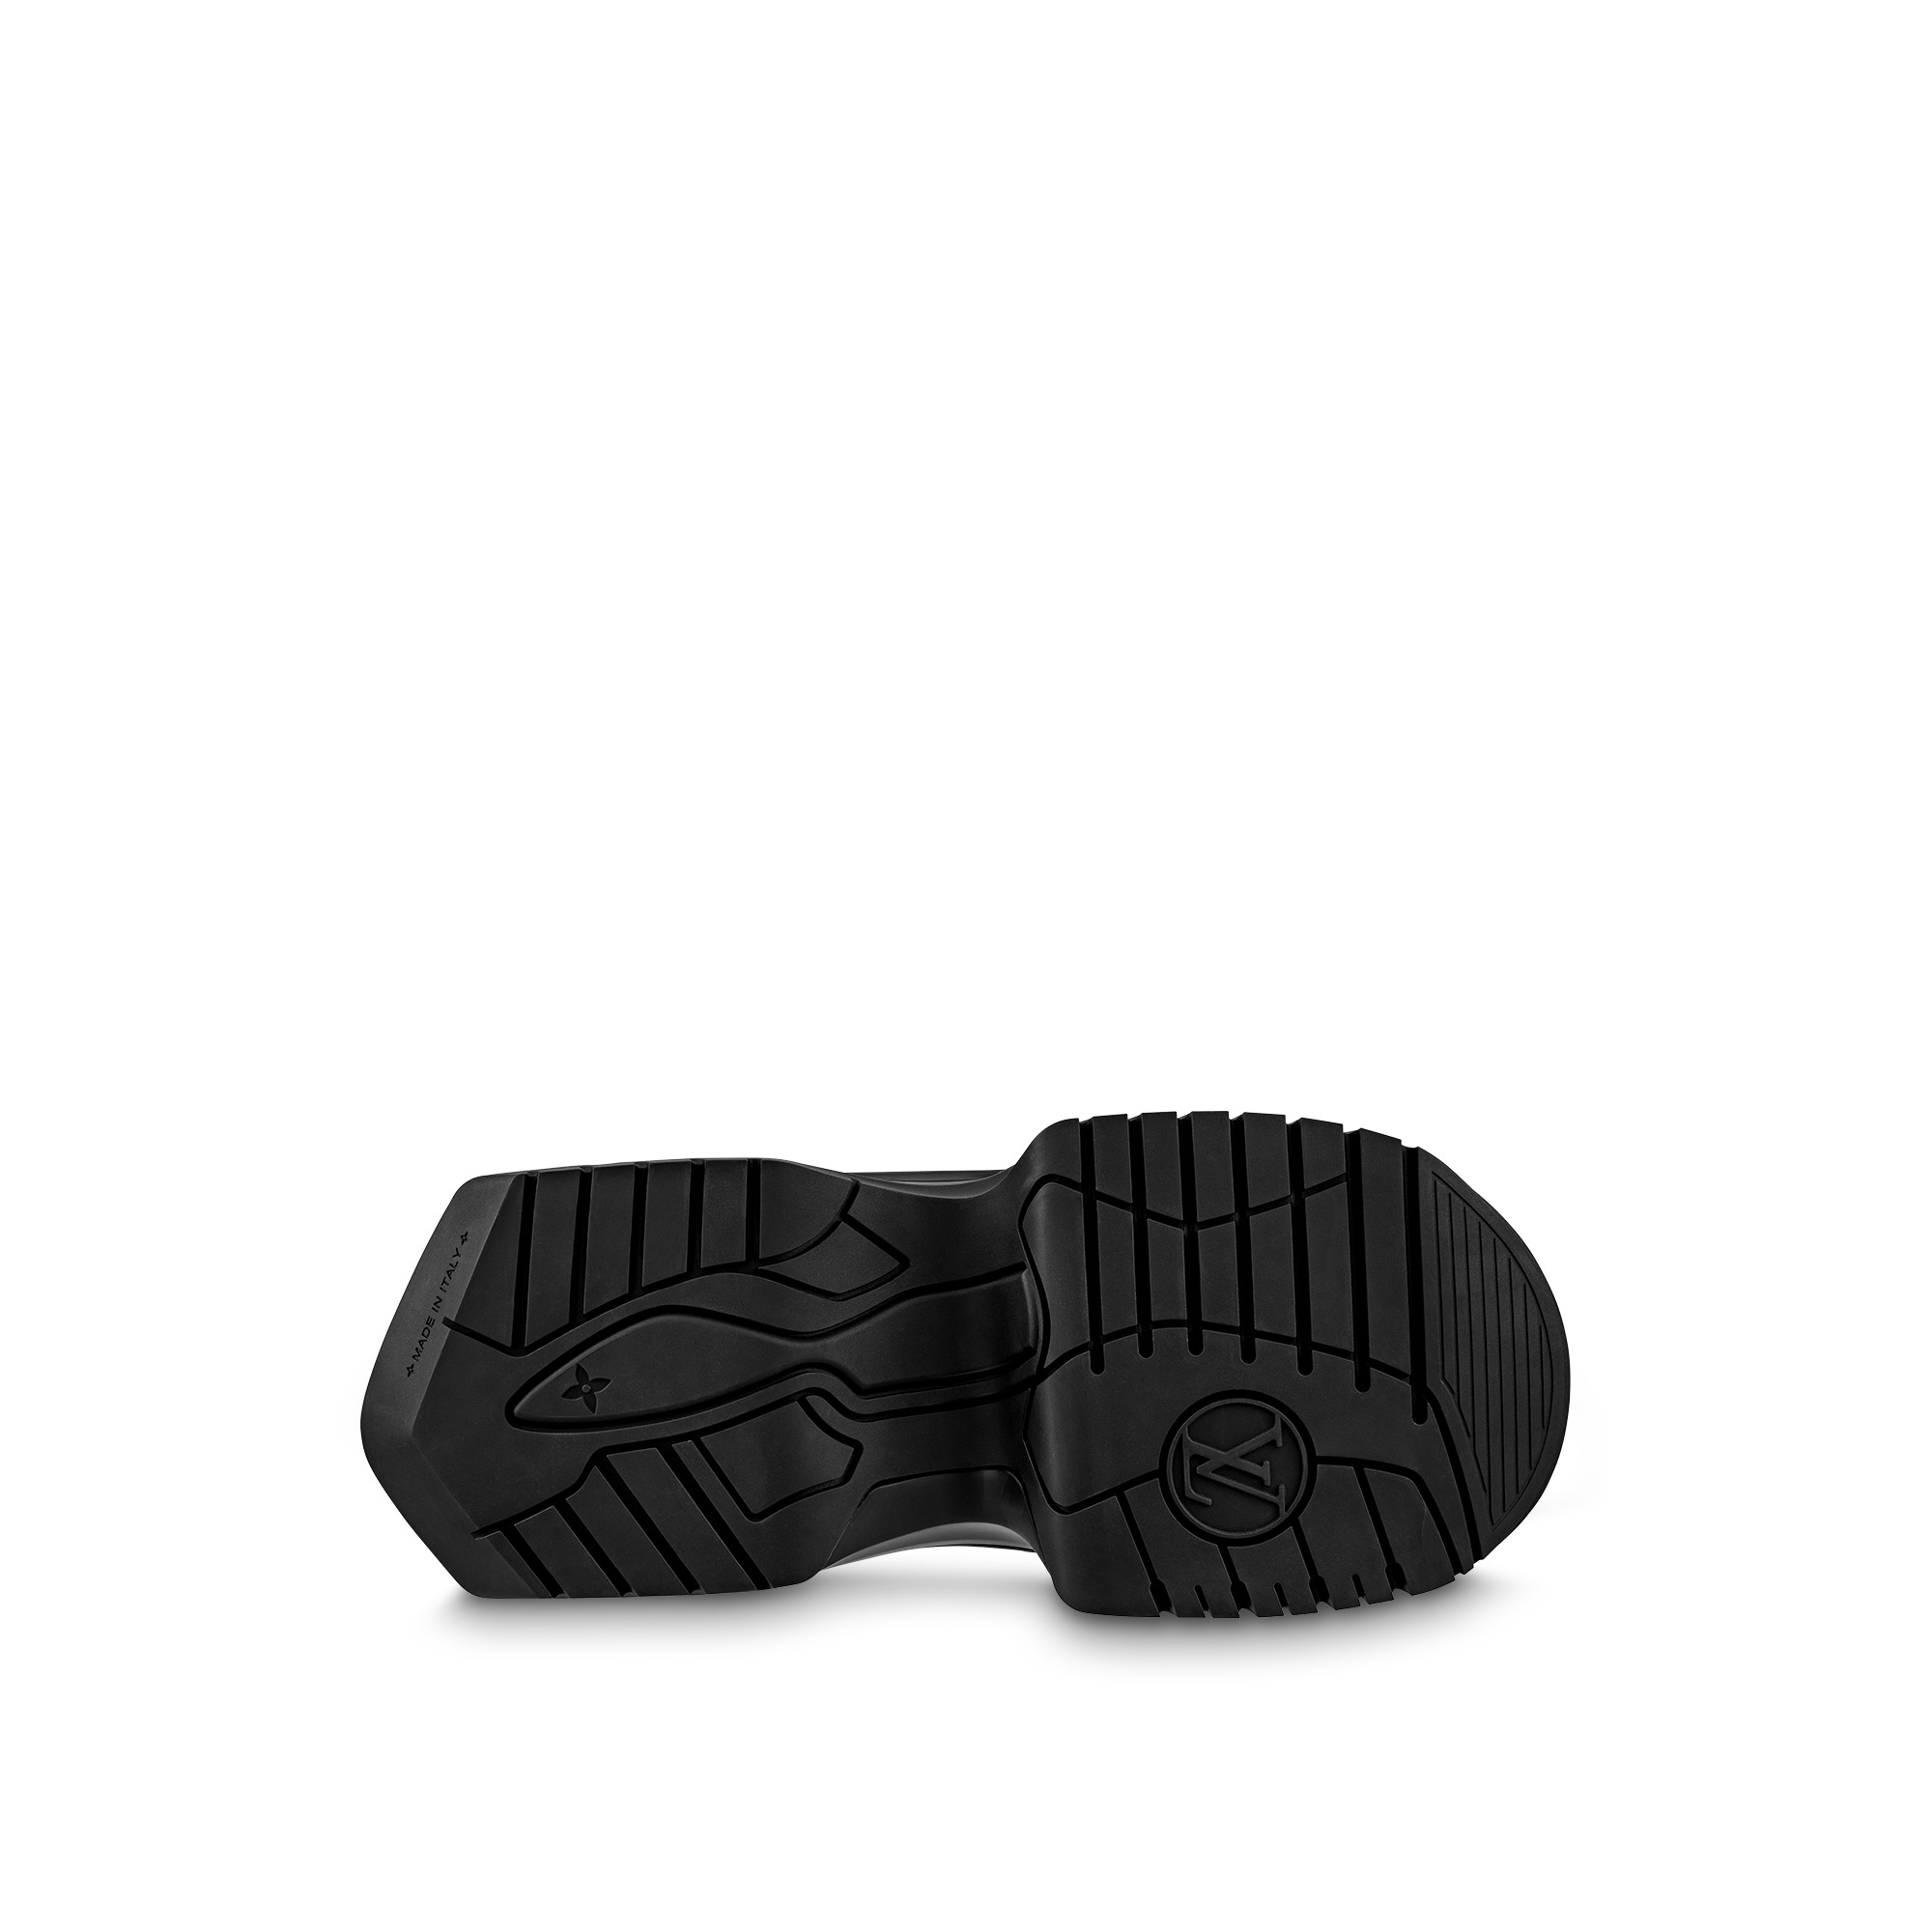 Louis Vuitton LV Archlight 2.0 Platform Sneaker White. Size 37.5